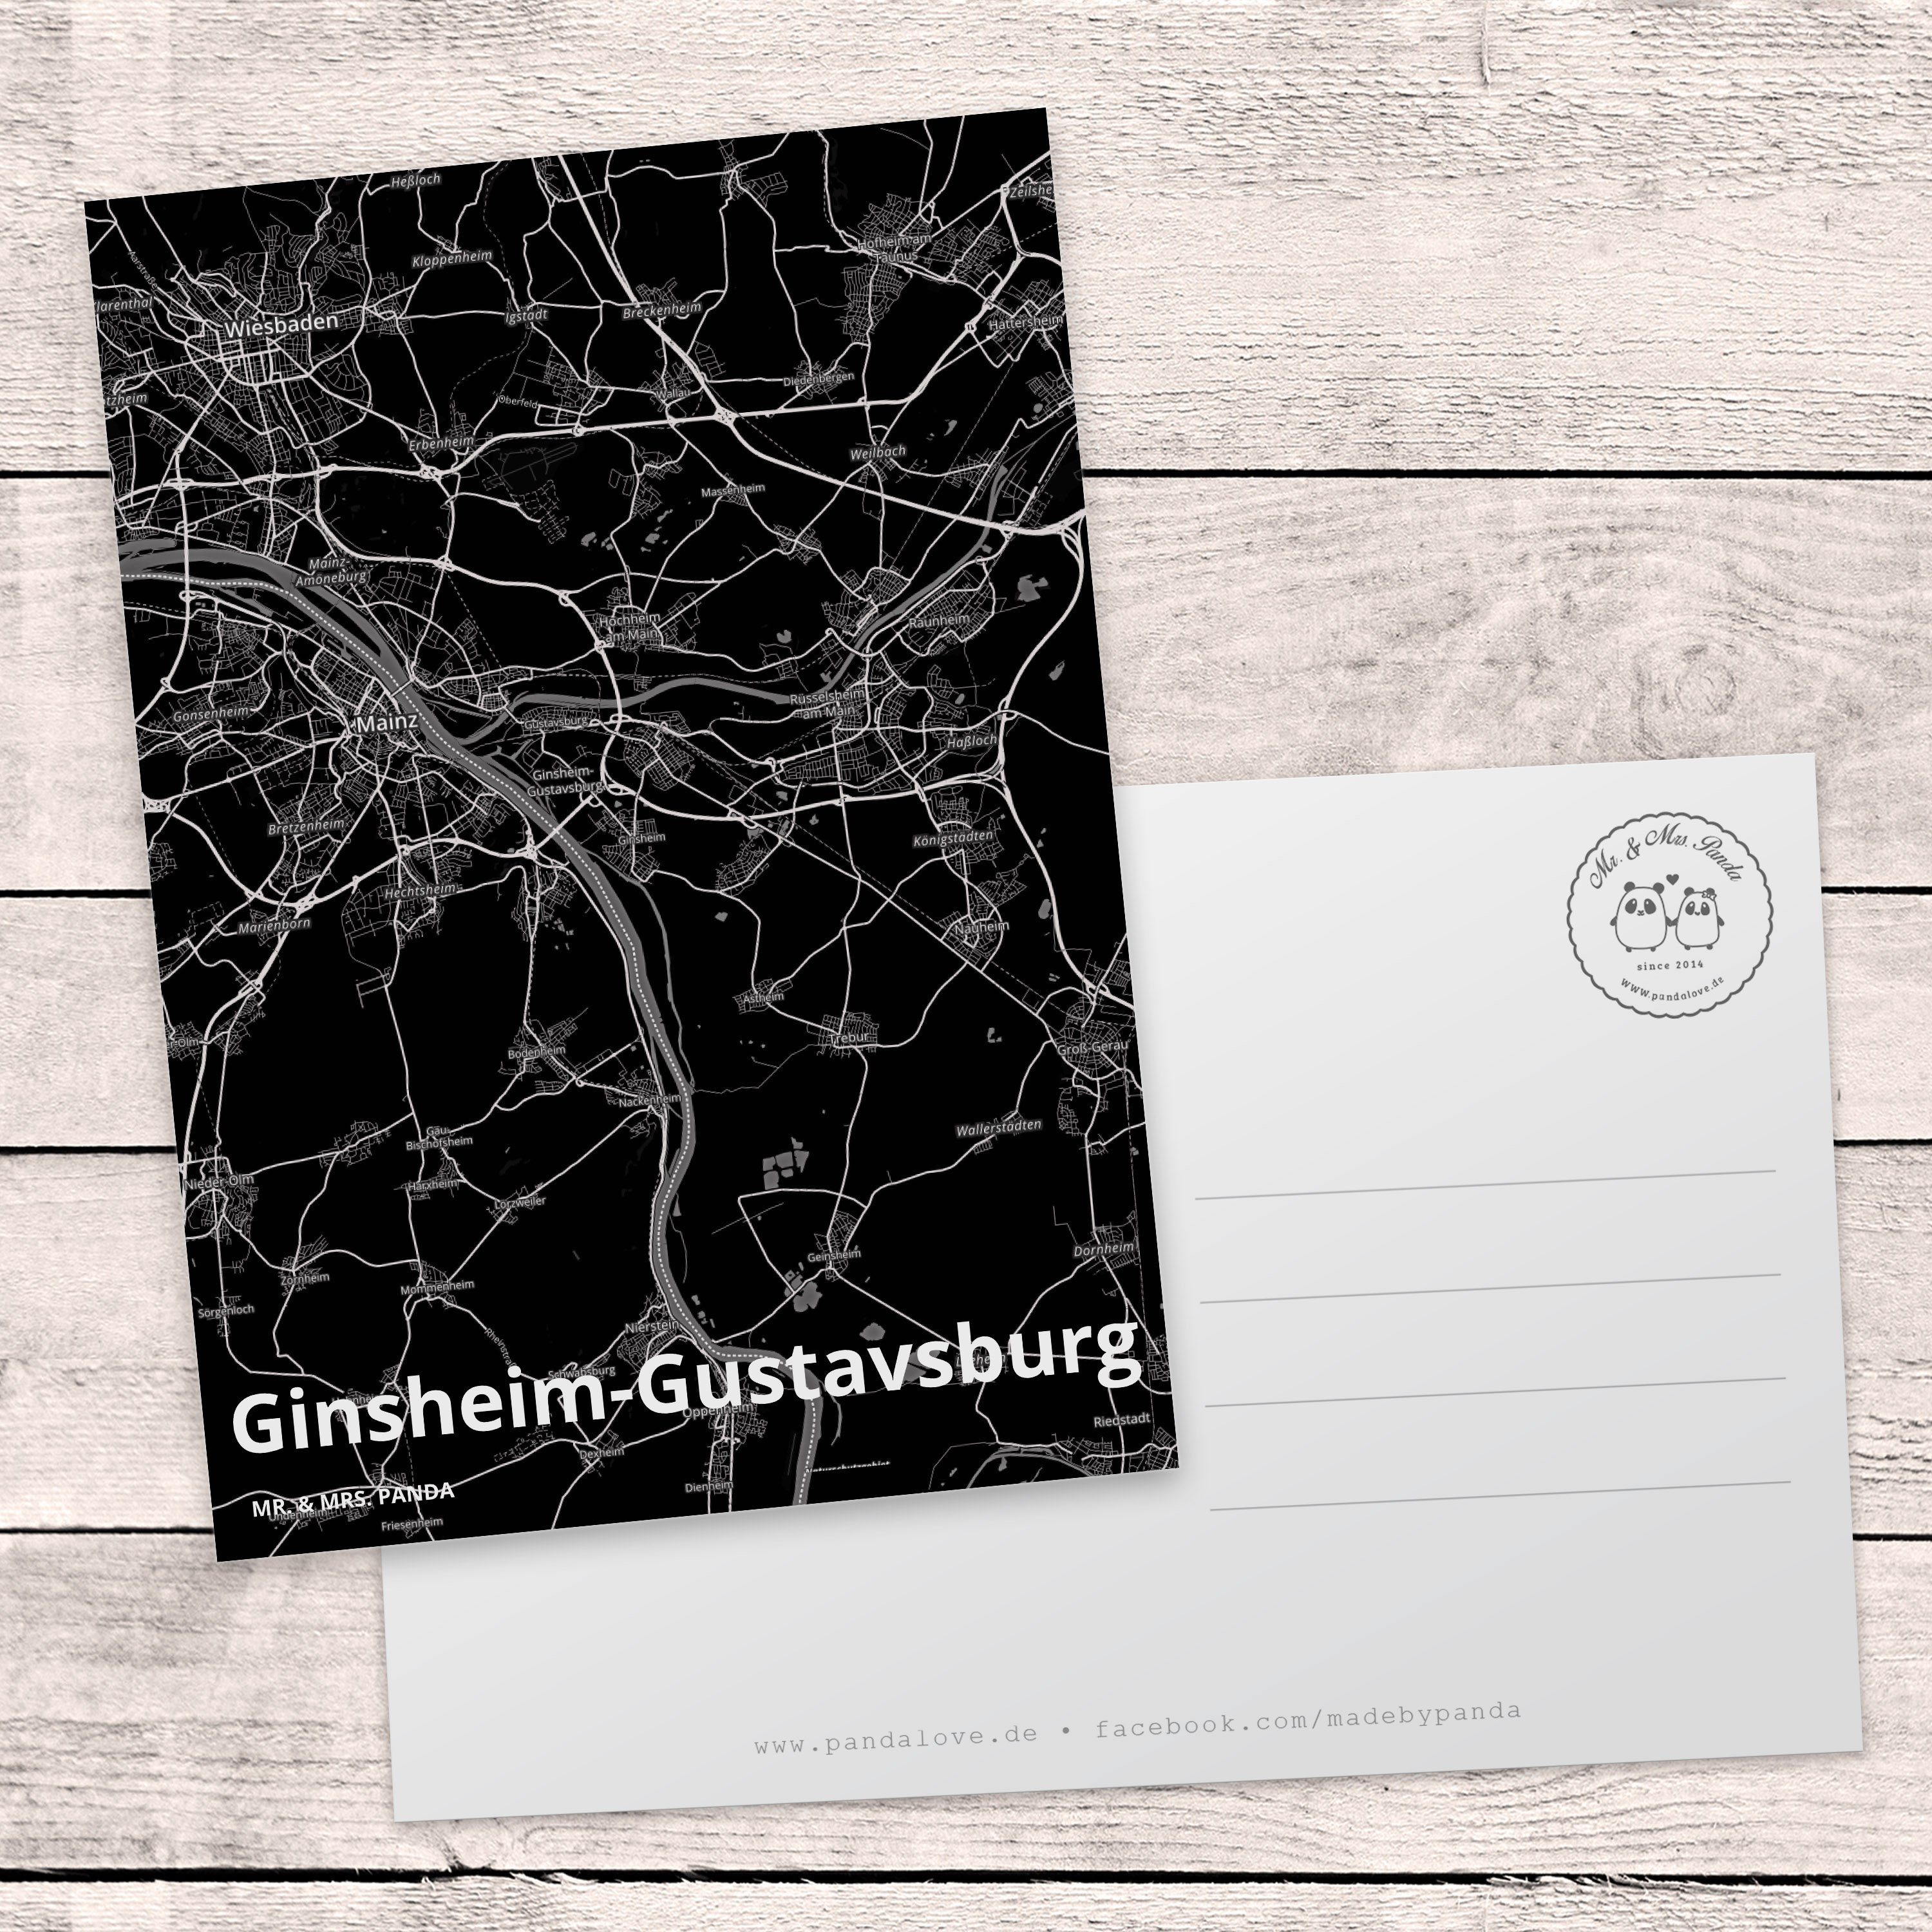 & Geschenk, Ginsheim-Gustavsburg - Mrs. Einladung, O Mr. Panda Dankeskarte, Grußkarte, Postkarte